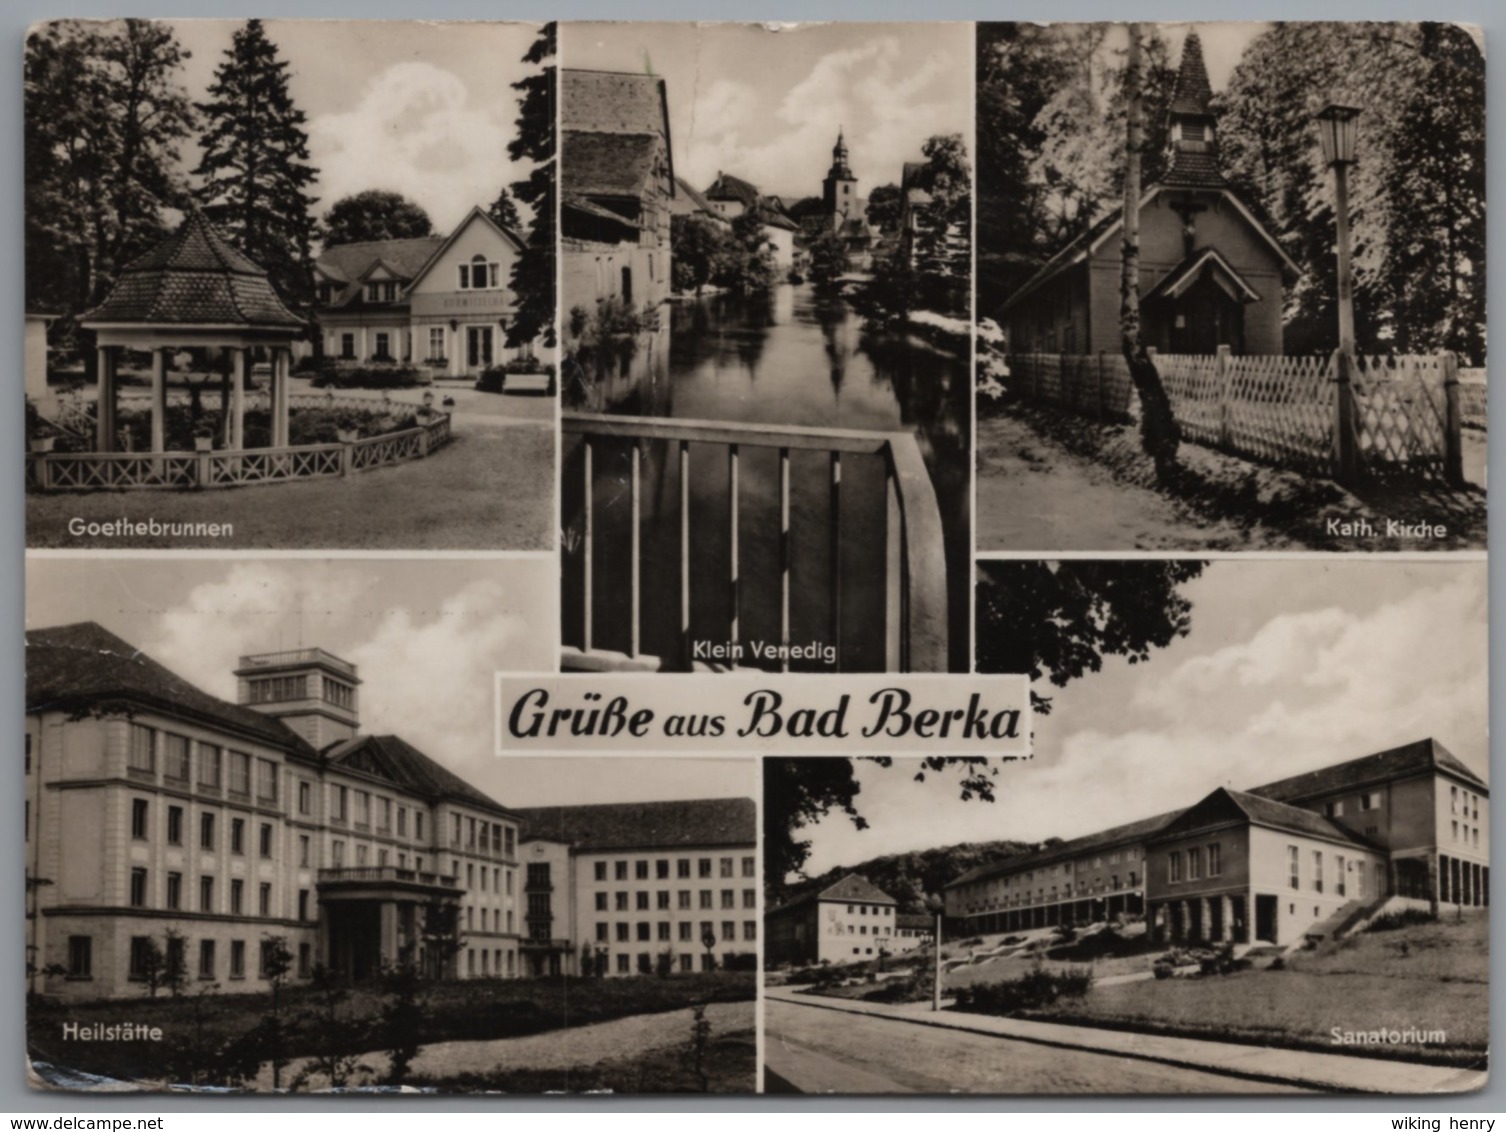 Bad Berka - S/w Mehrbildkarte 5   Mit Sonderstempel Festwoche 850 Jahre Bad Berka - Bad Berka